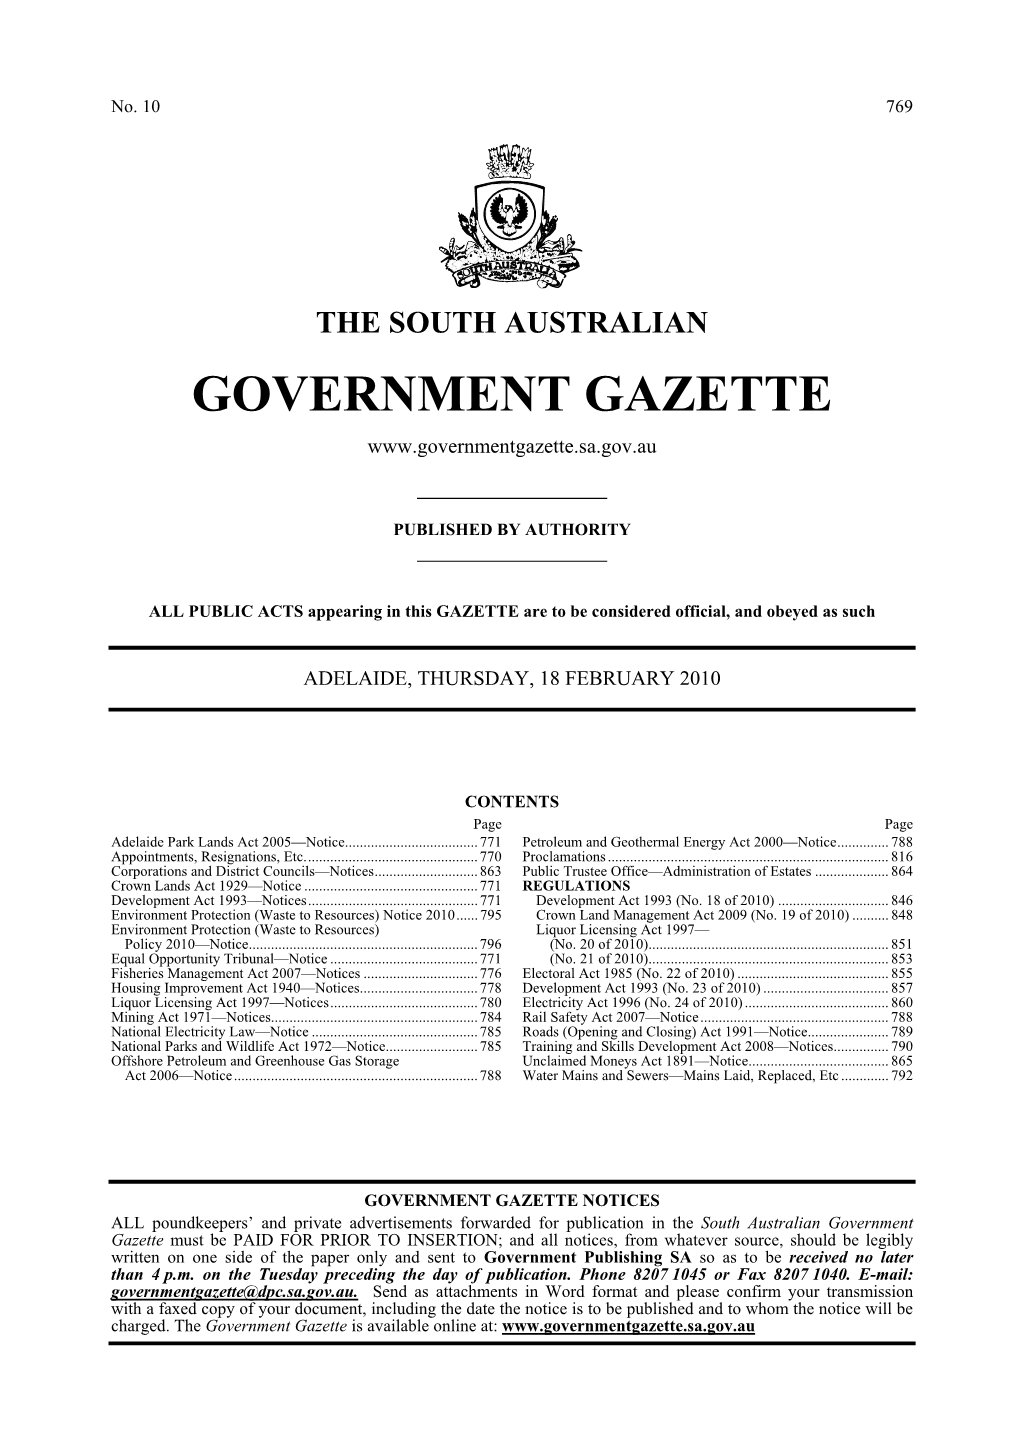 The South Australian Government Gazette